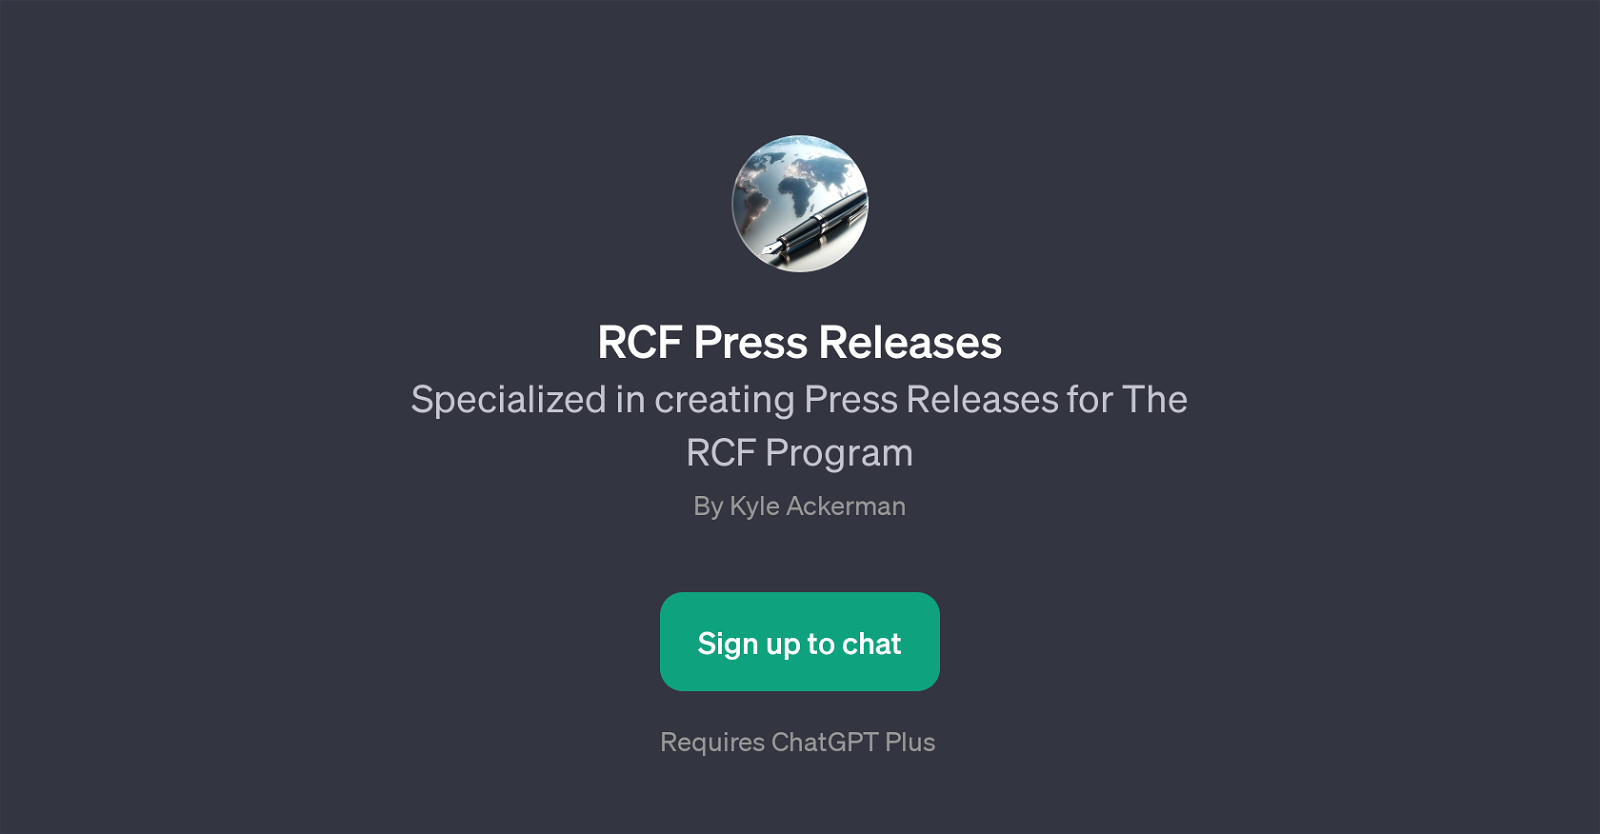 RCF Press Releases website